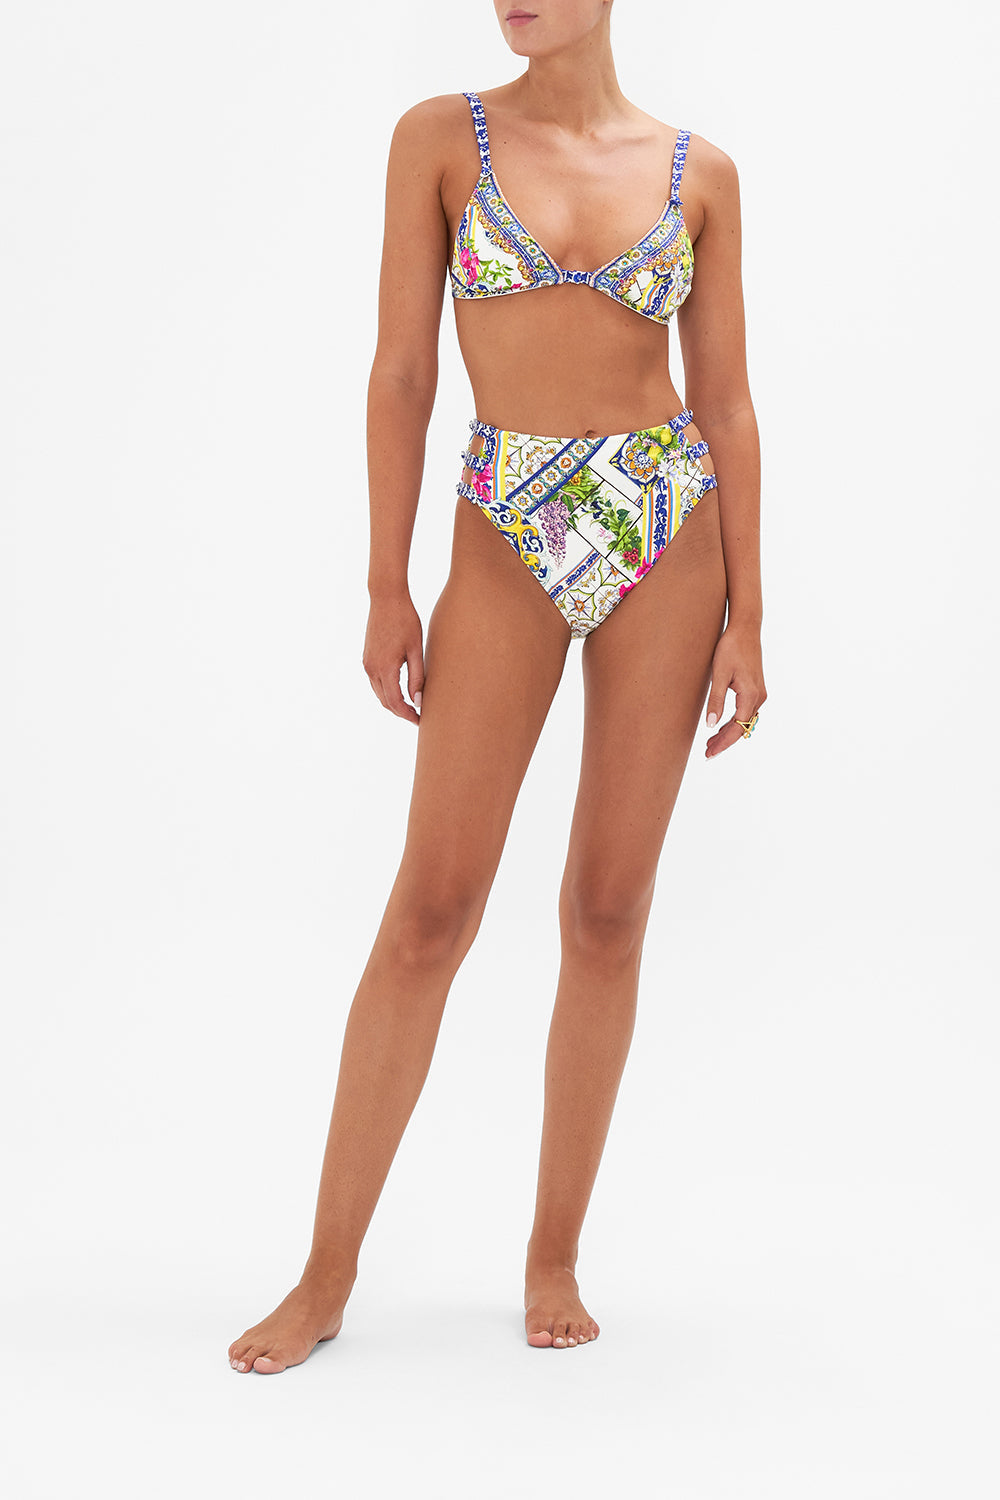 Front view of model wearing CAMILLA soft underwire bikini top in Amalfi Amore print